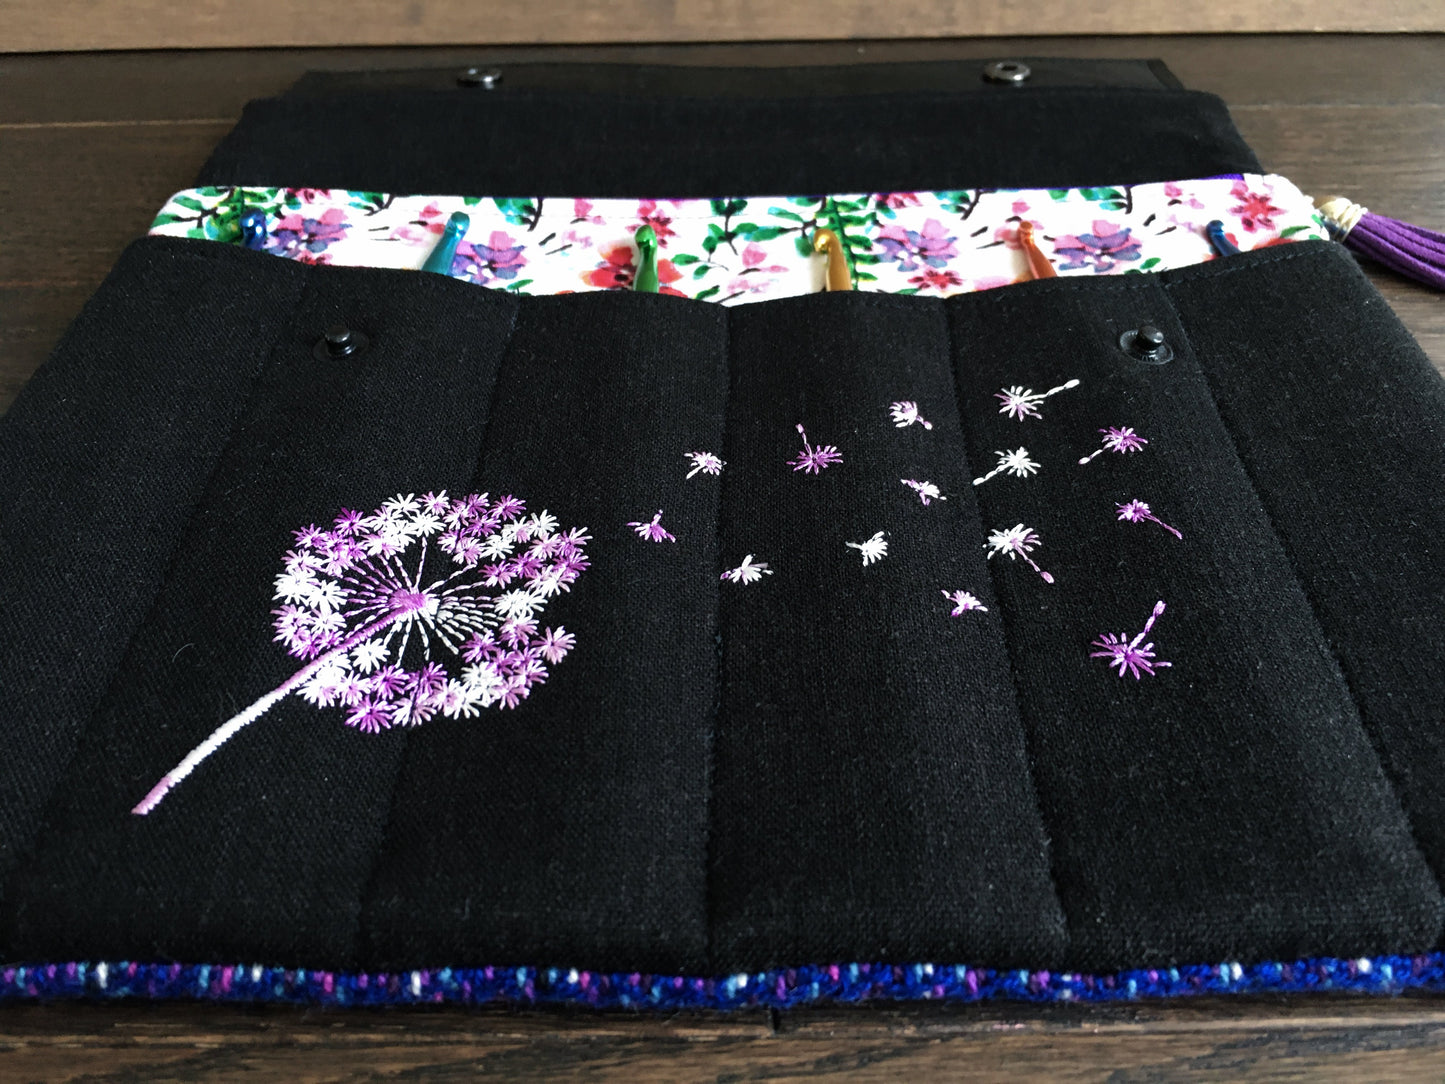 Rainbow Dandelions Regular Crochet Hook Wallet and Organizer